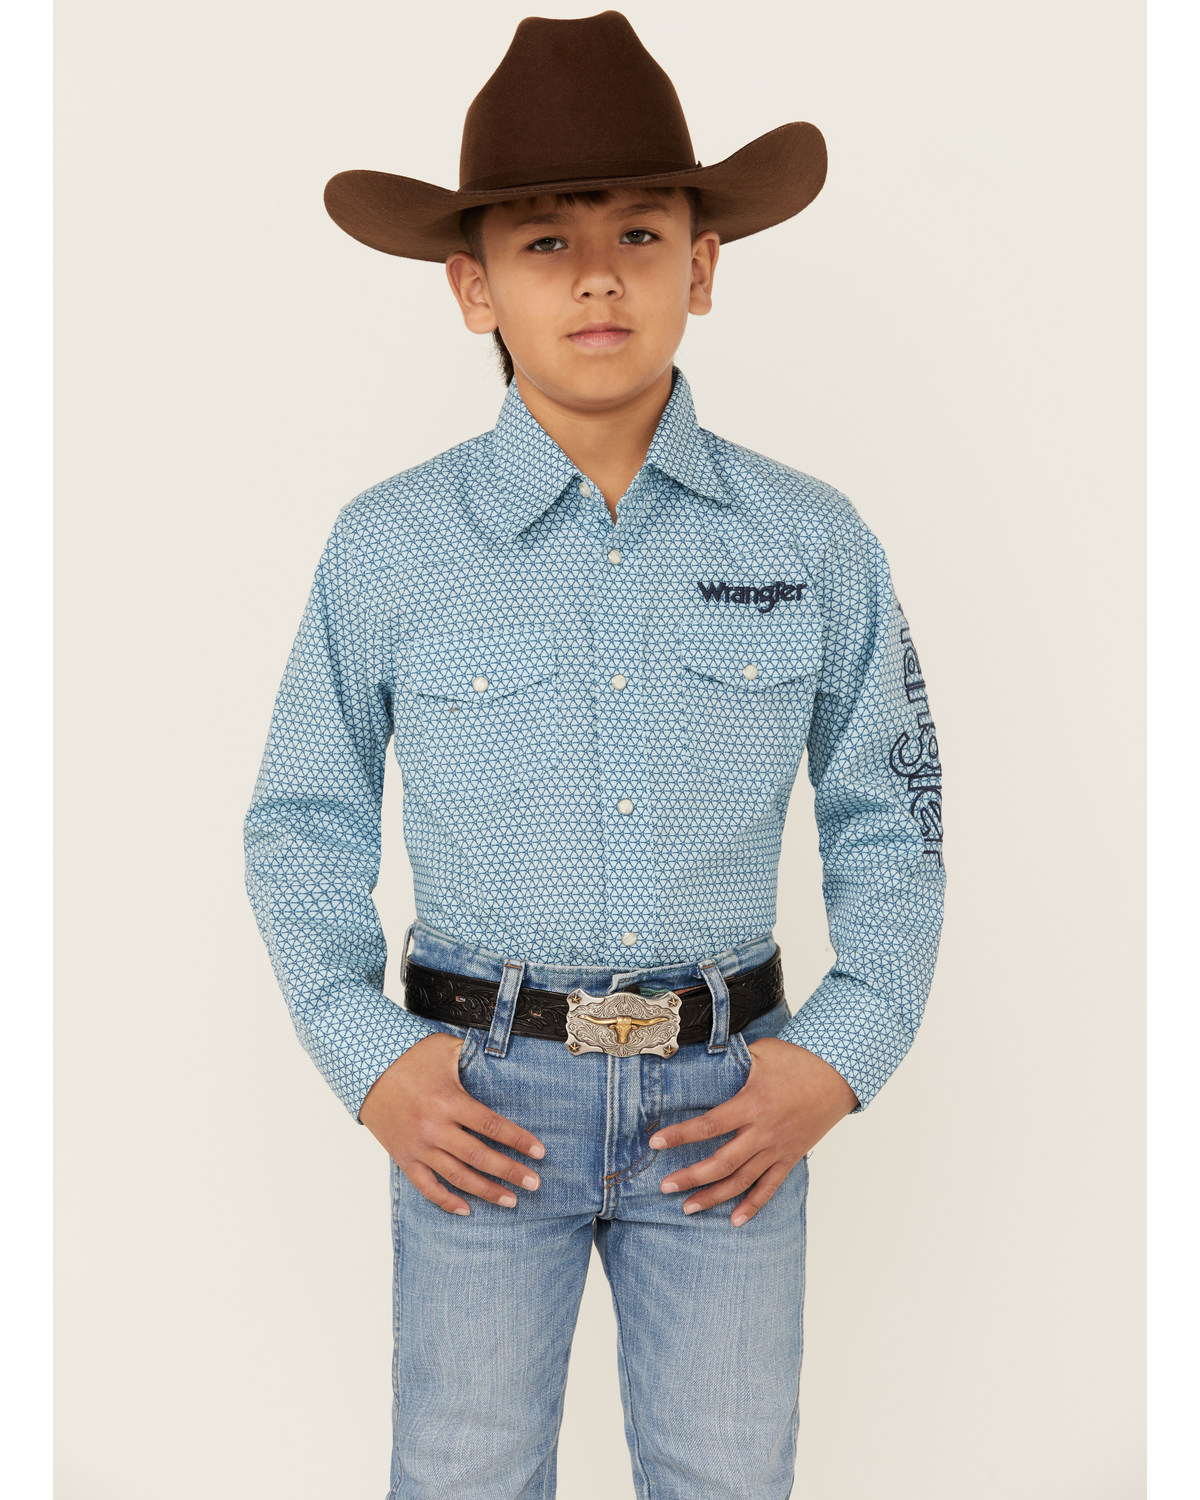 Wrangler Boys' Geo Print Long Sleeve Snap Western Shirt